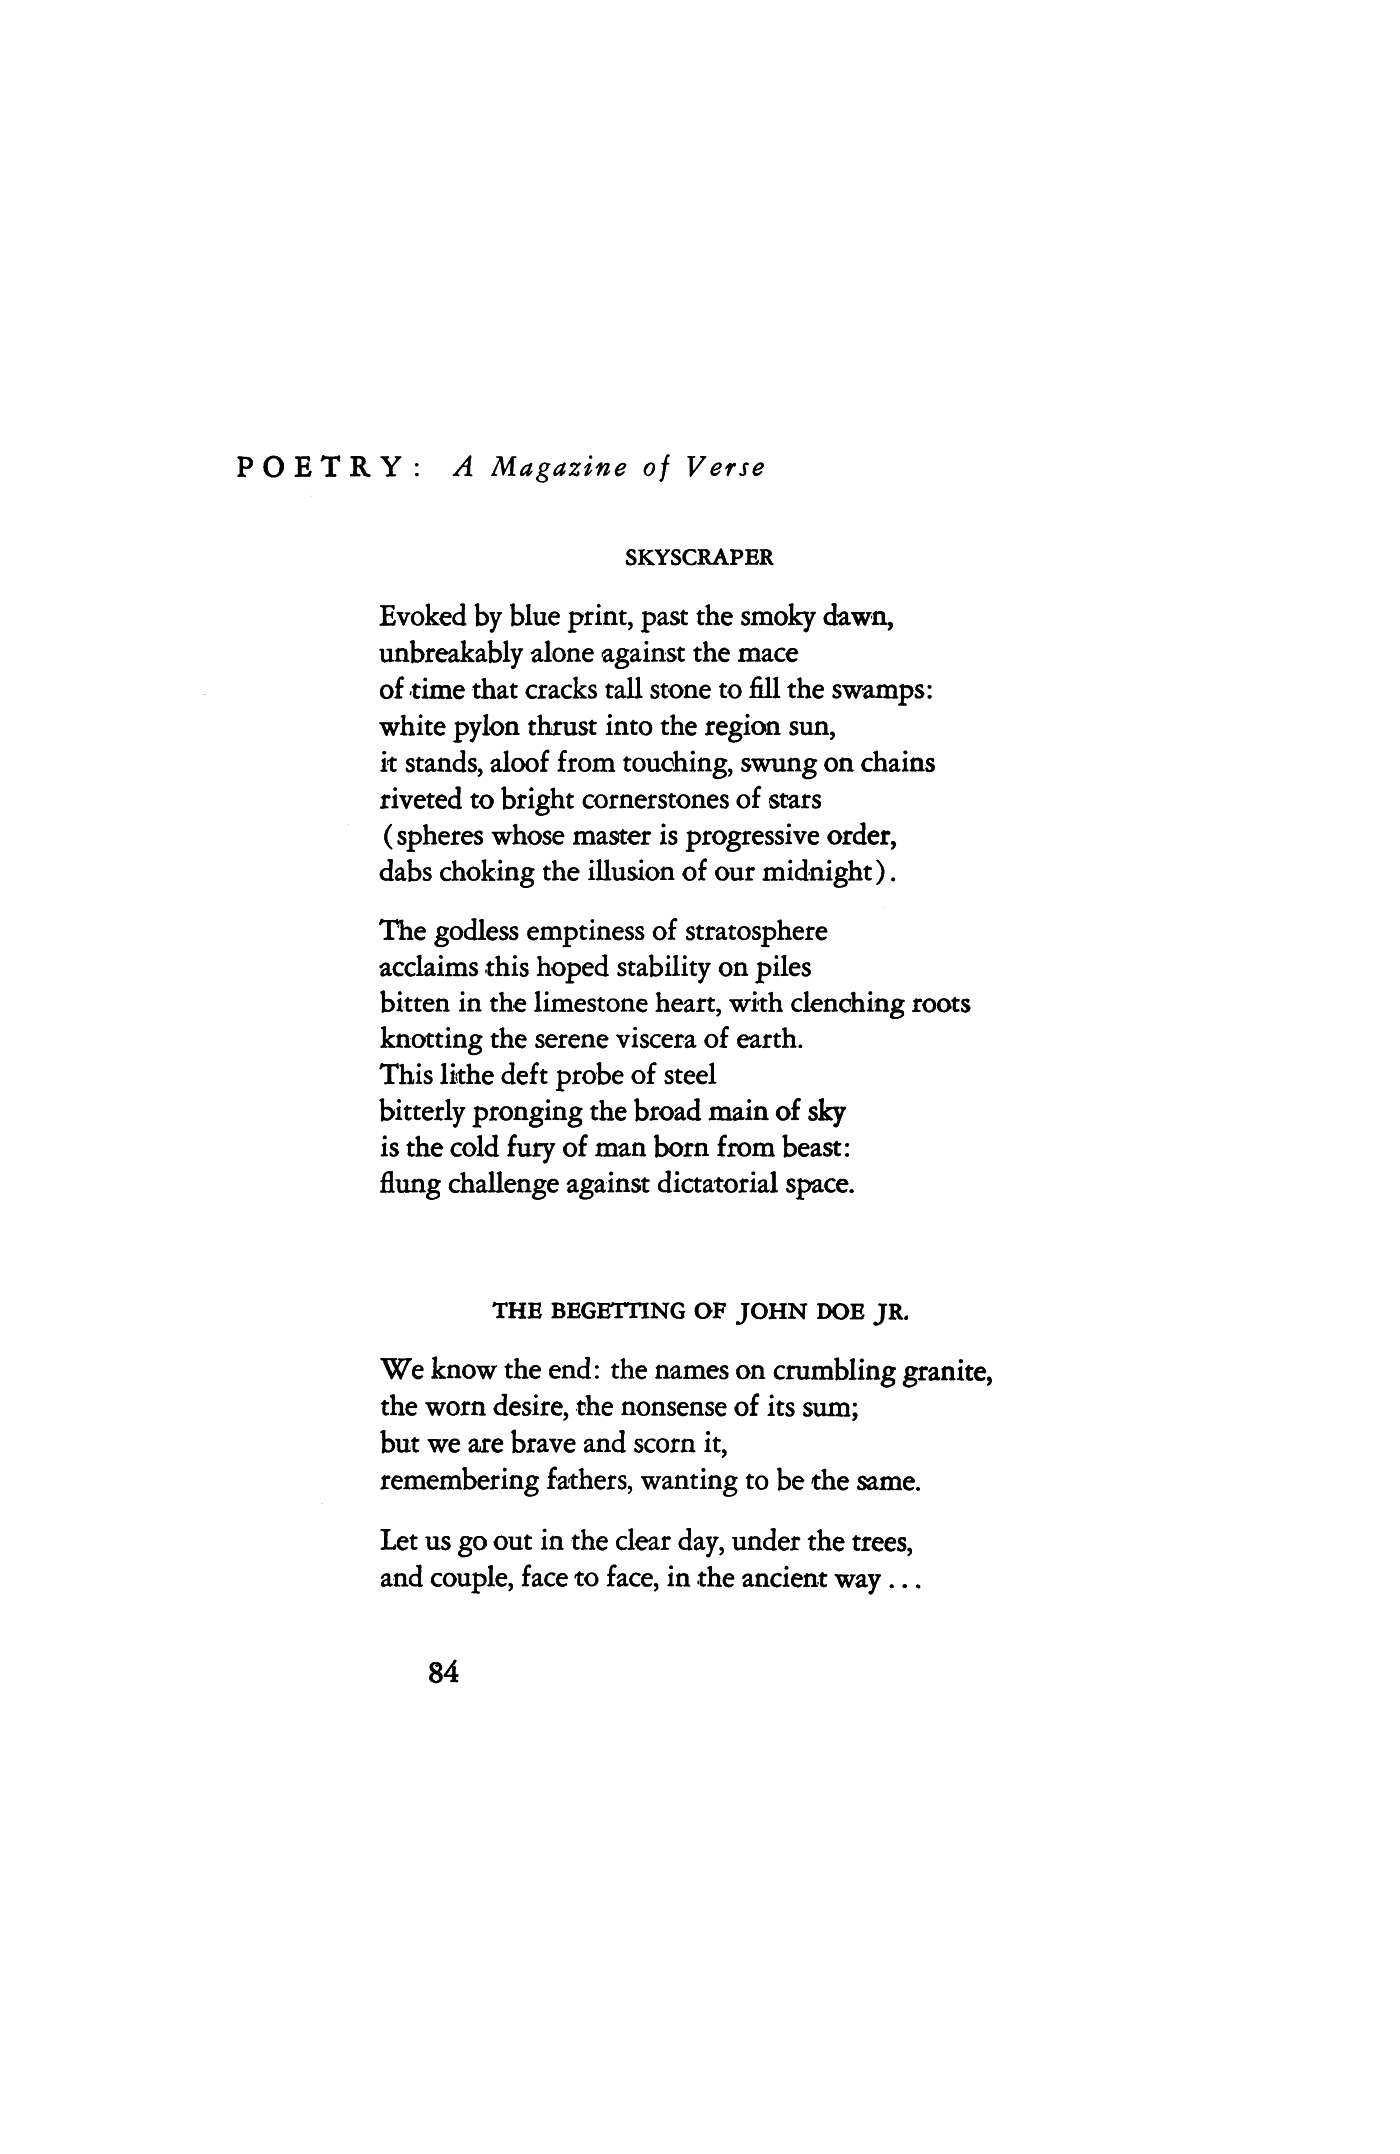 Our Struggle - Our Struggle Poem by John Doe